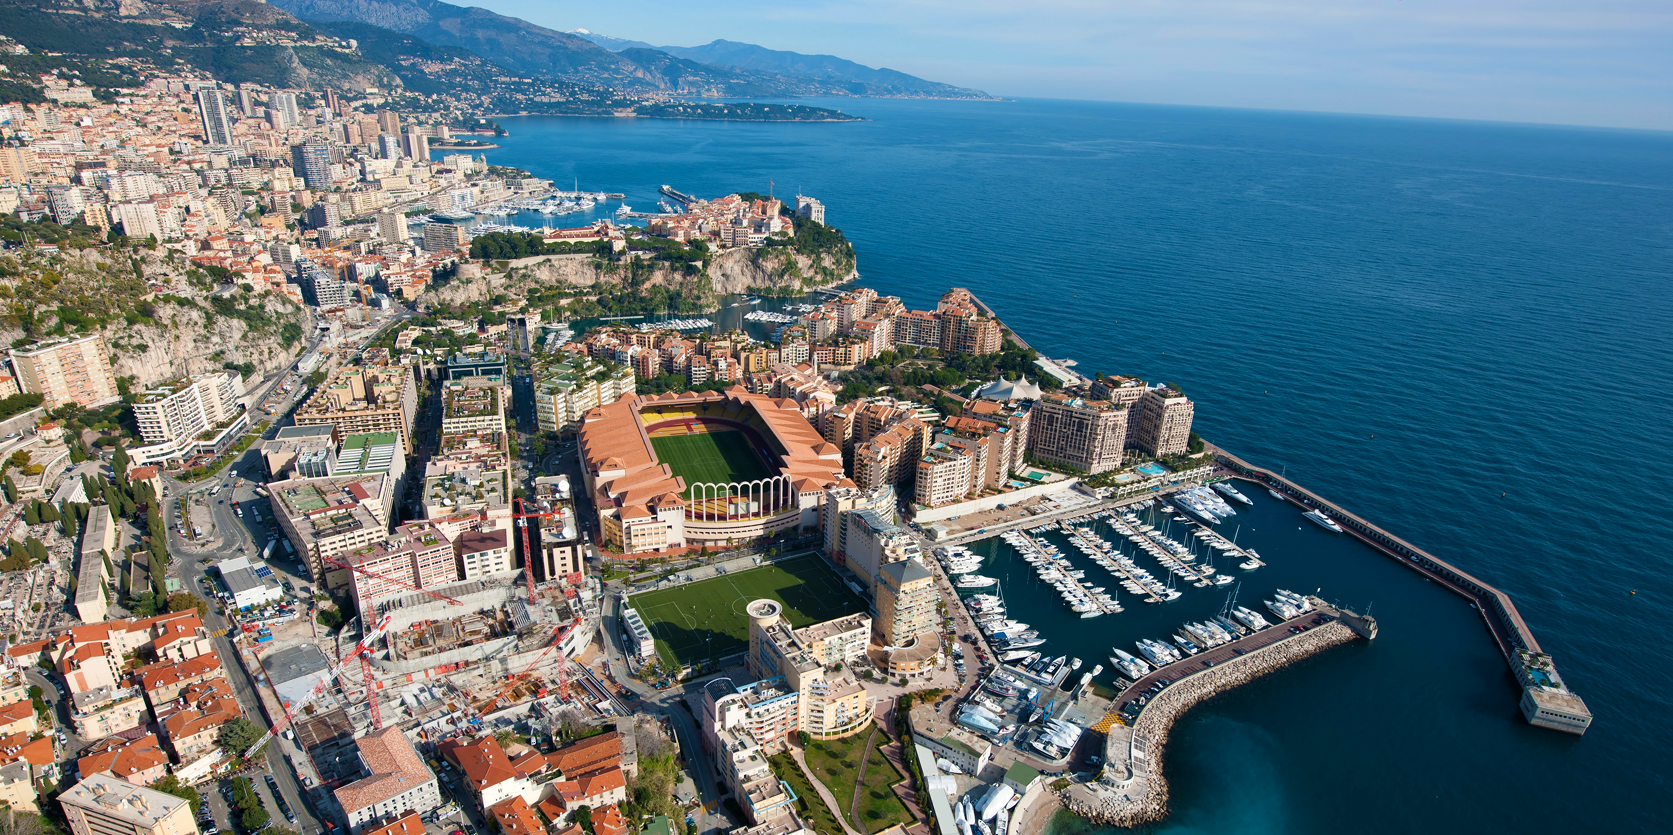 Stade-Louis-2-Monaco